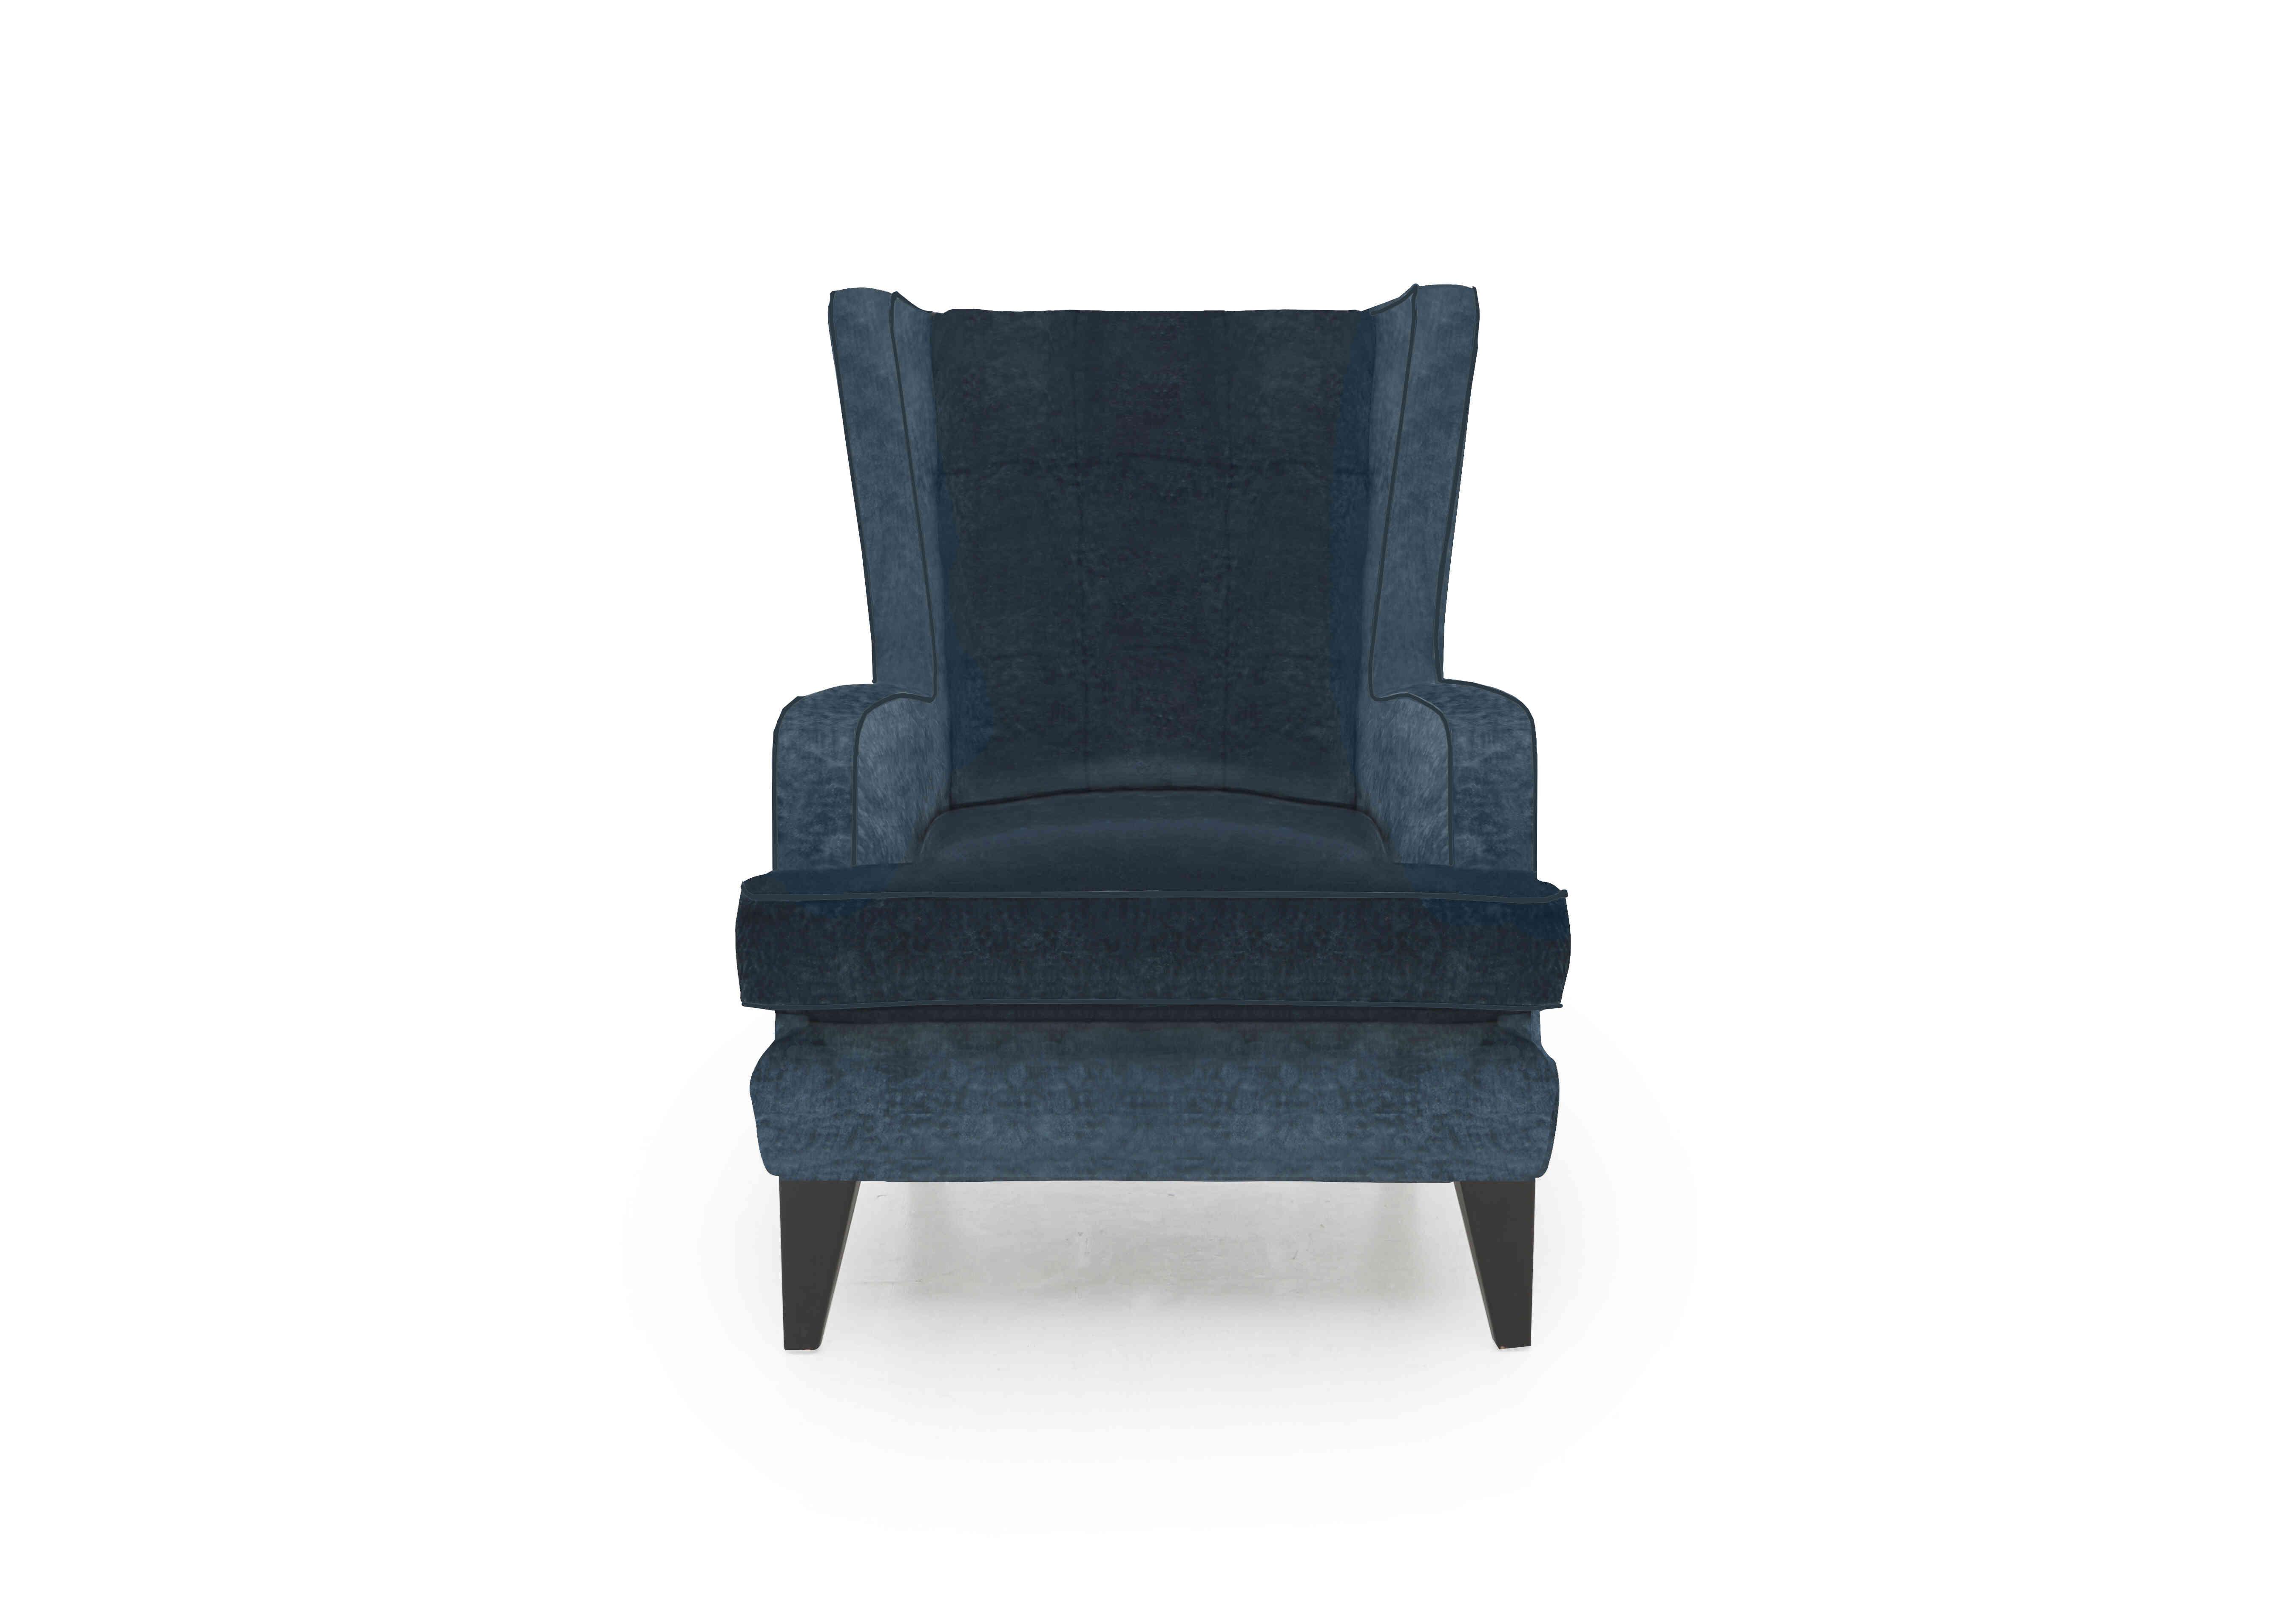 Modern Classics Wing Chair in Remini Petrol Blue Sp Mf on Furniture Village